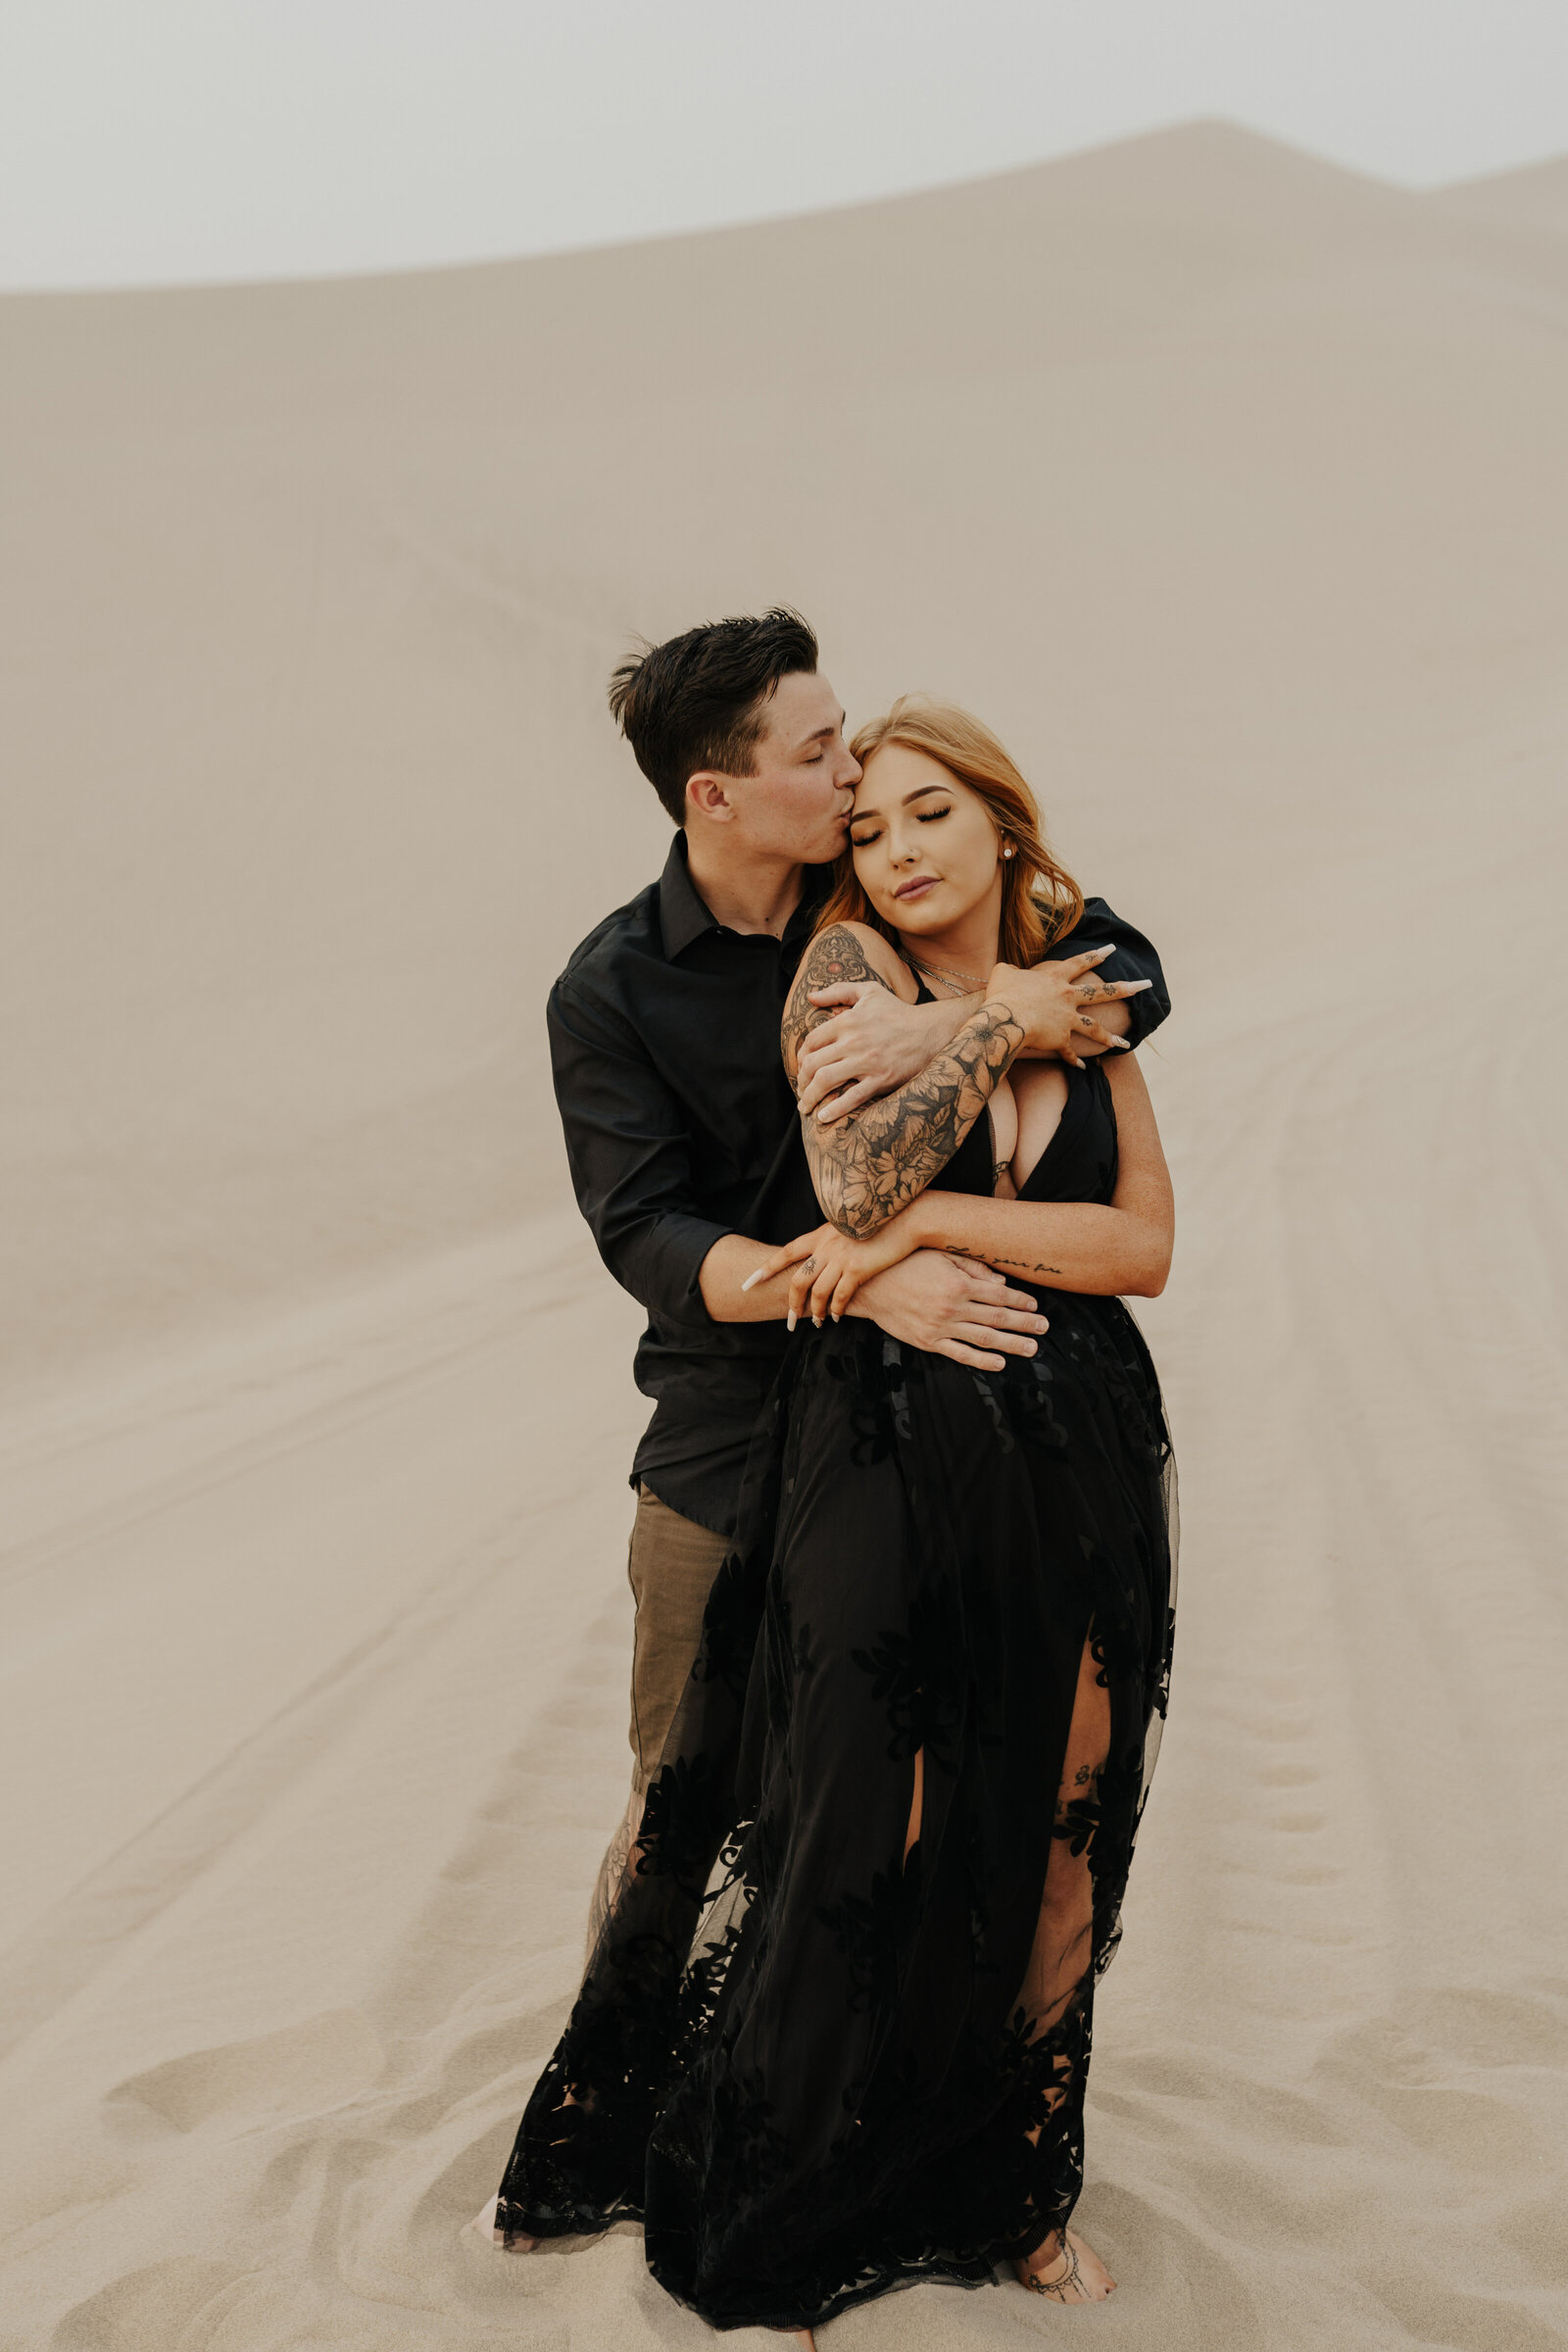 Sand Dunes Couples Photos - Raquel King Photography16